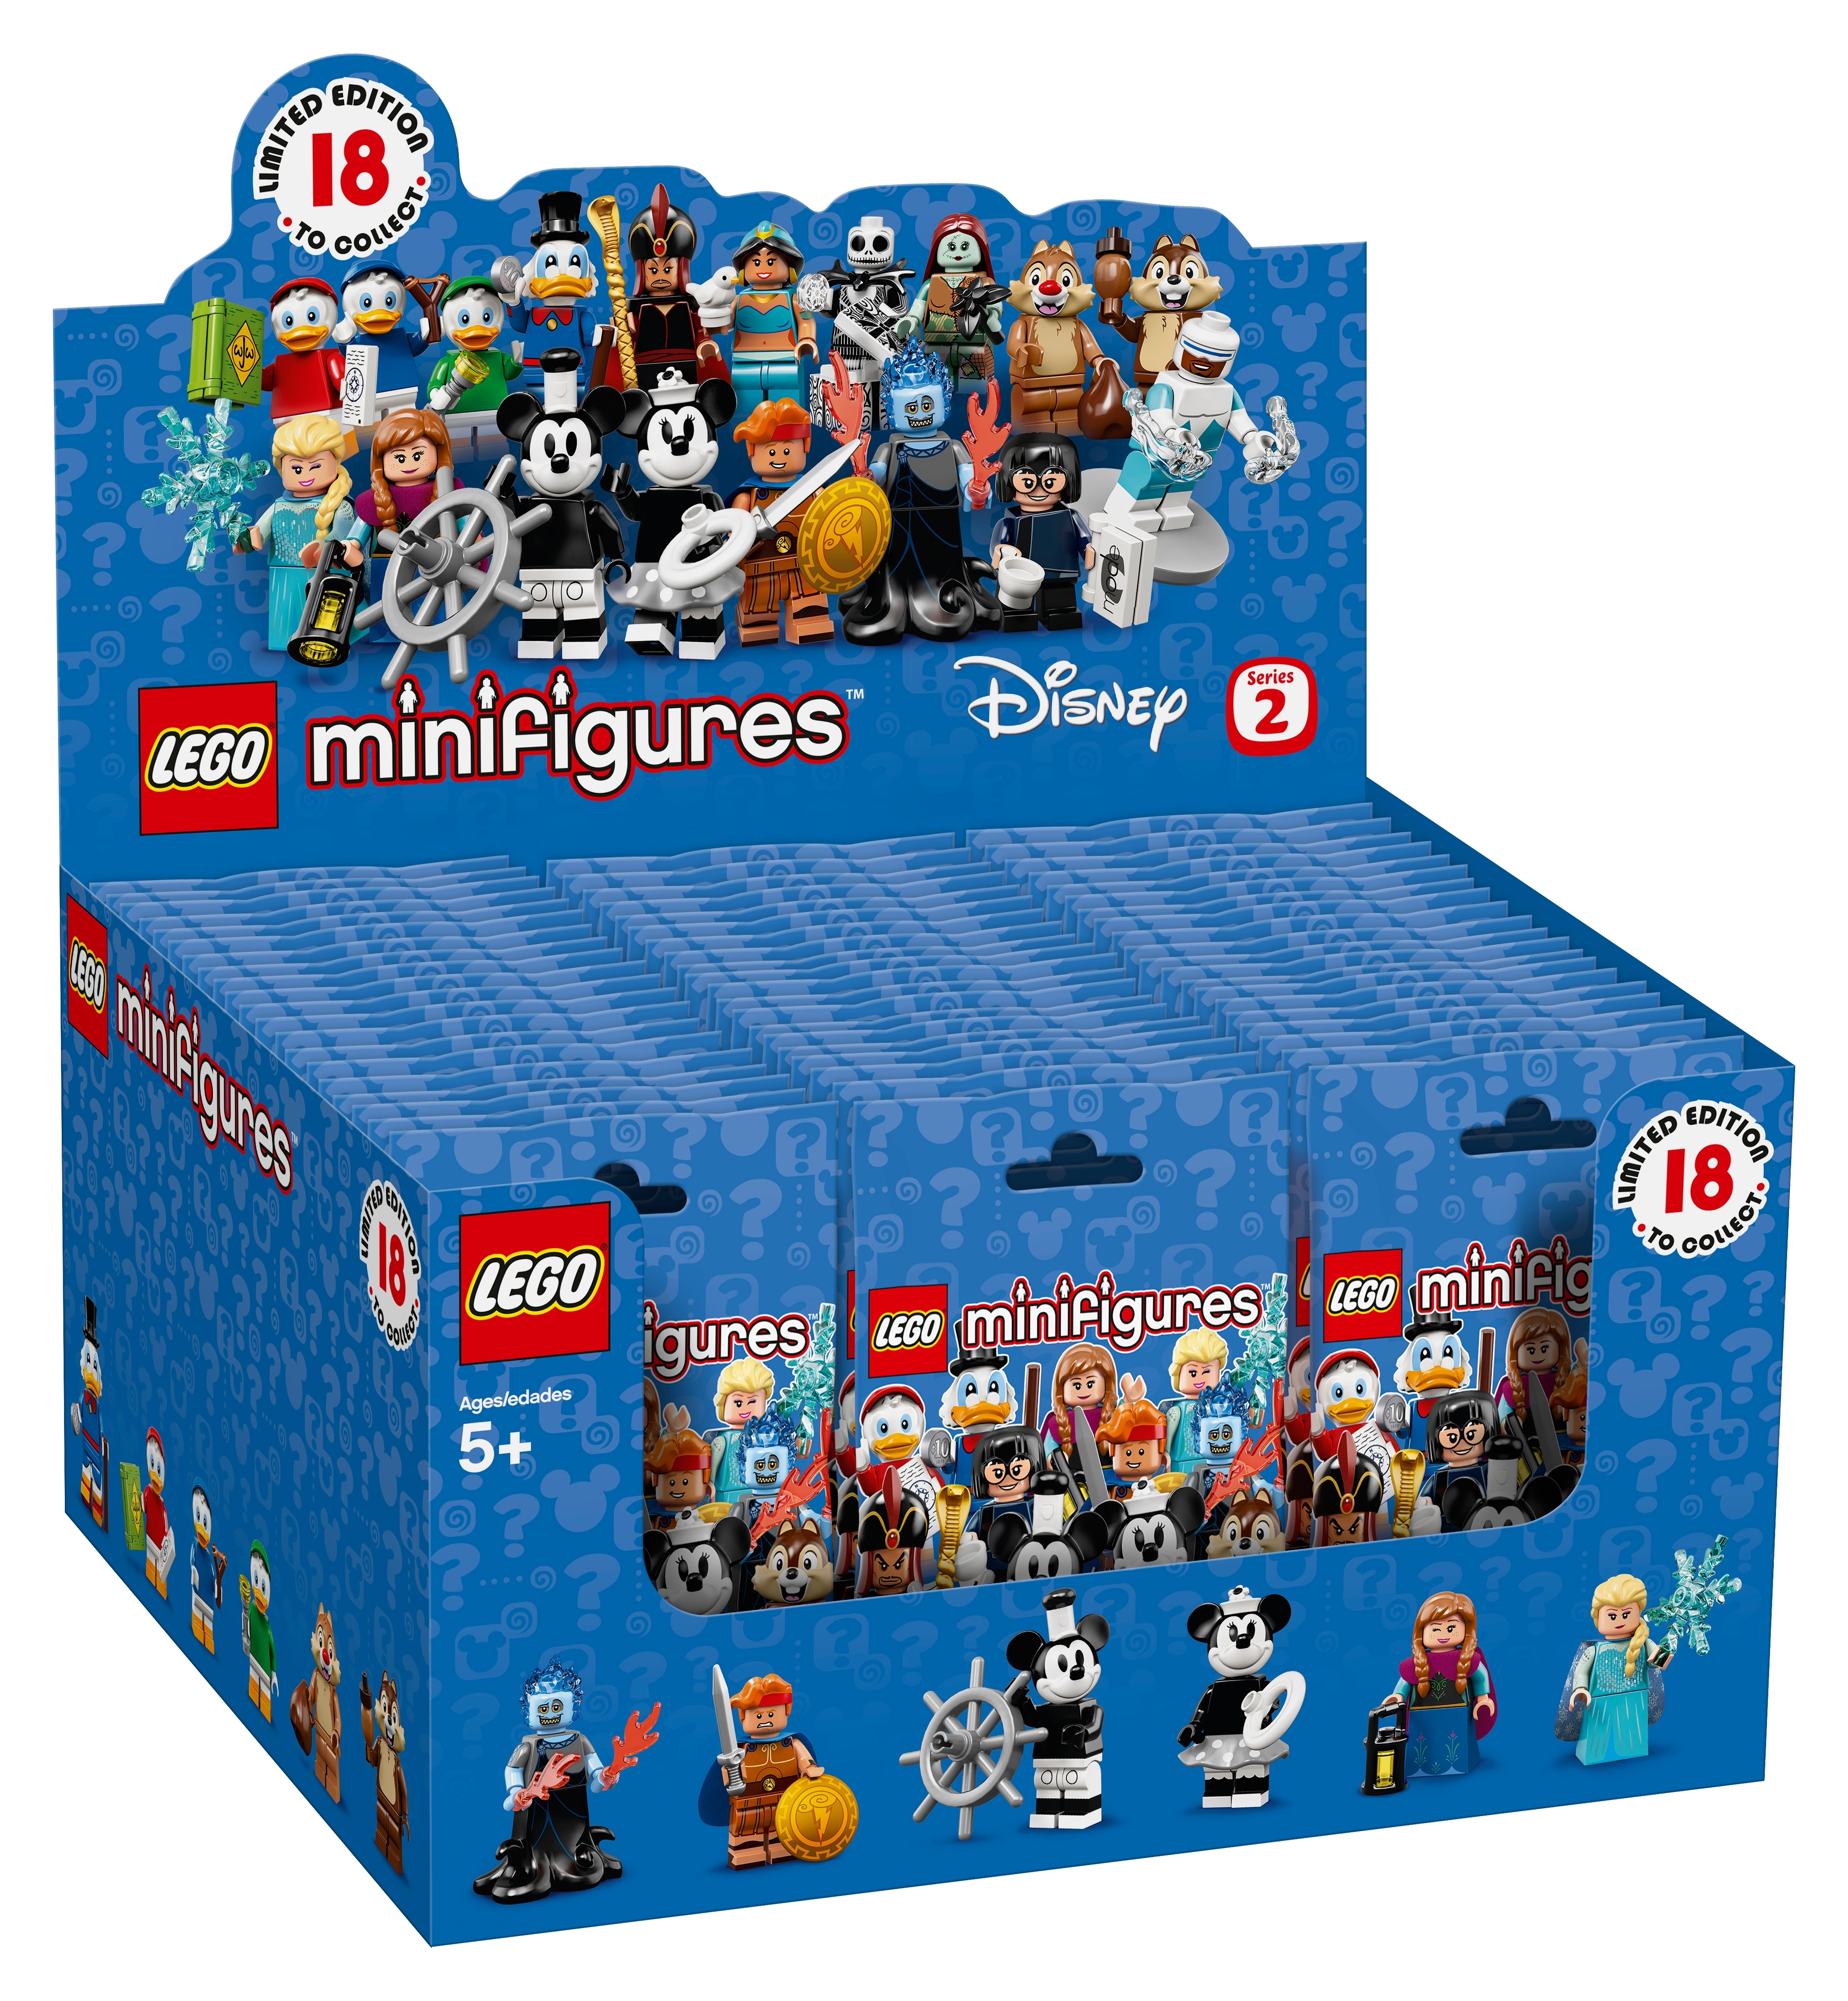 Complete Set NEW & Sealed LEGO Disney Minifigures Series 2 18 Figures 